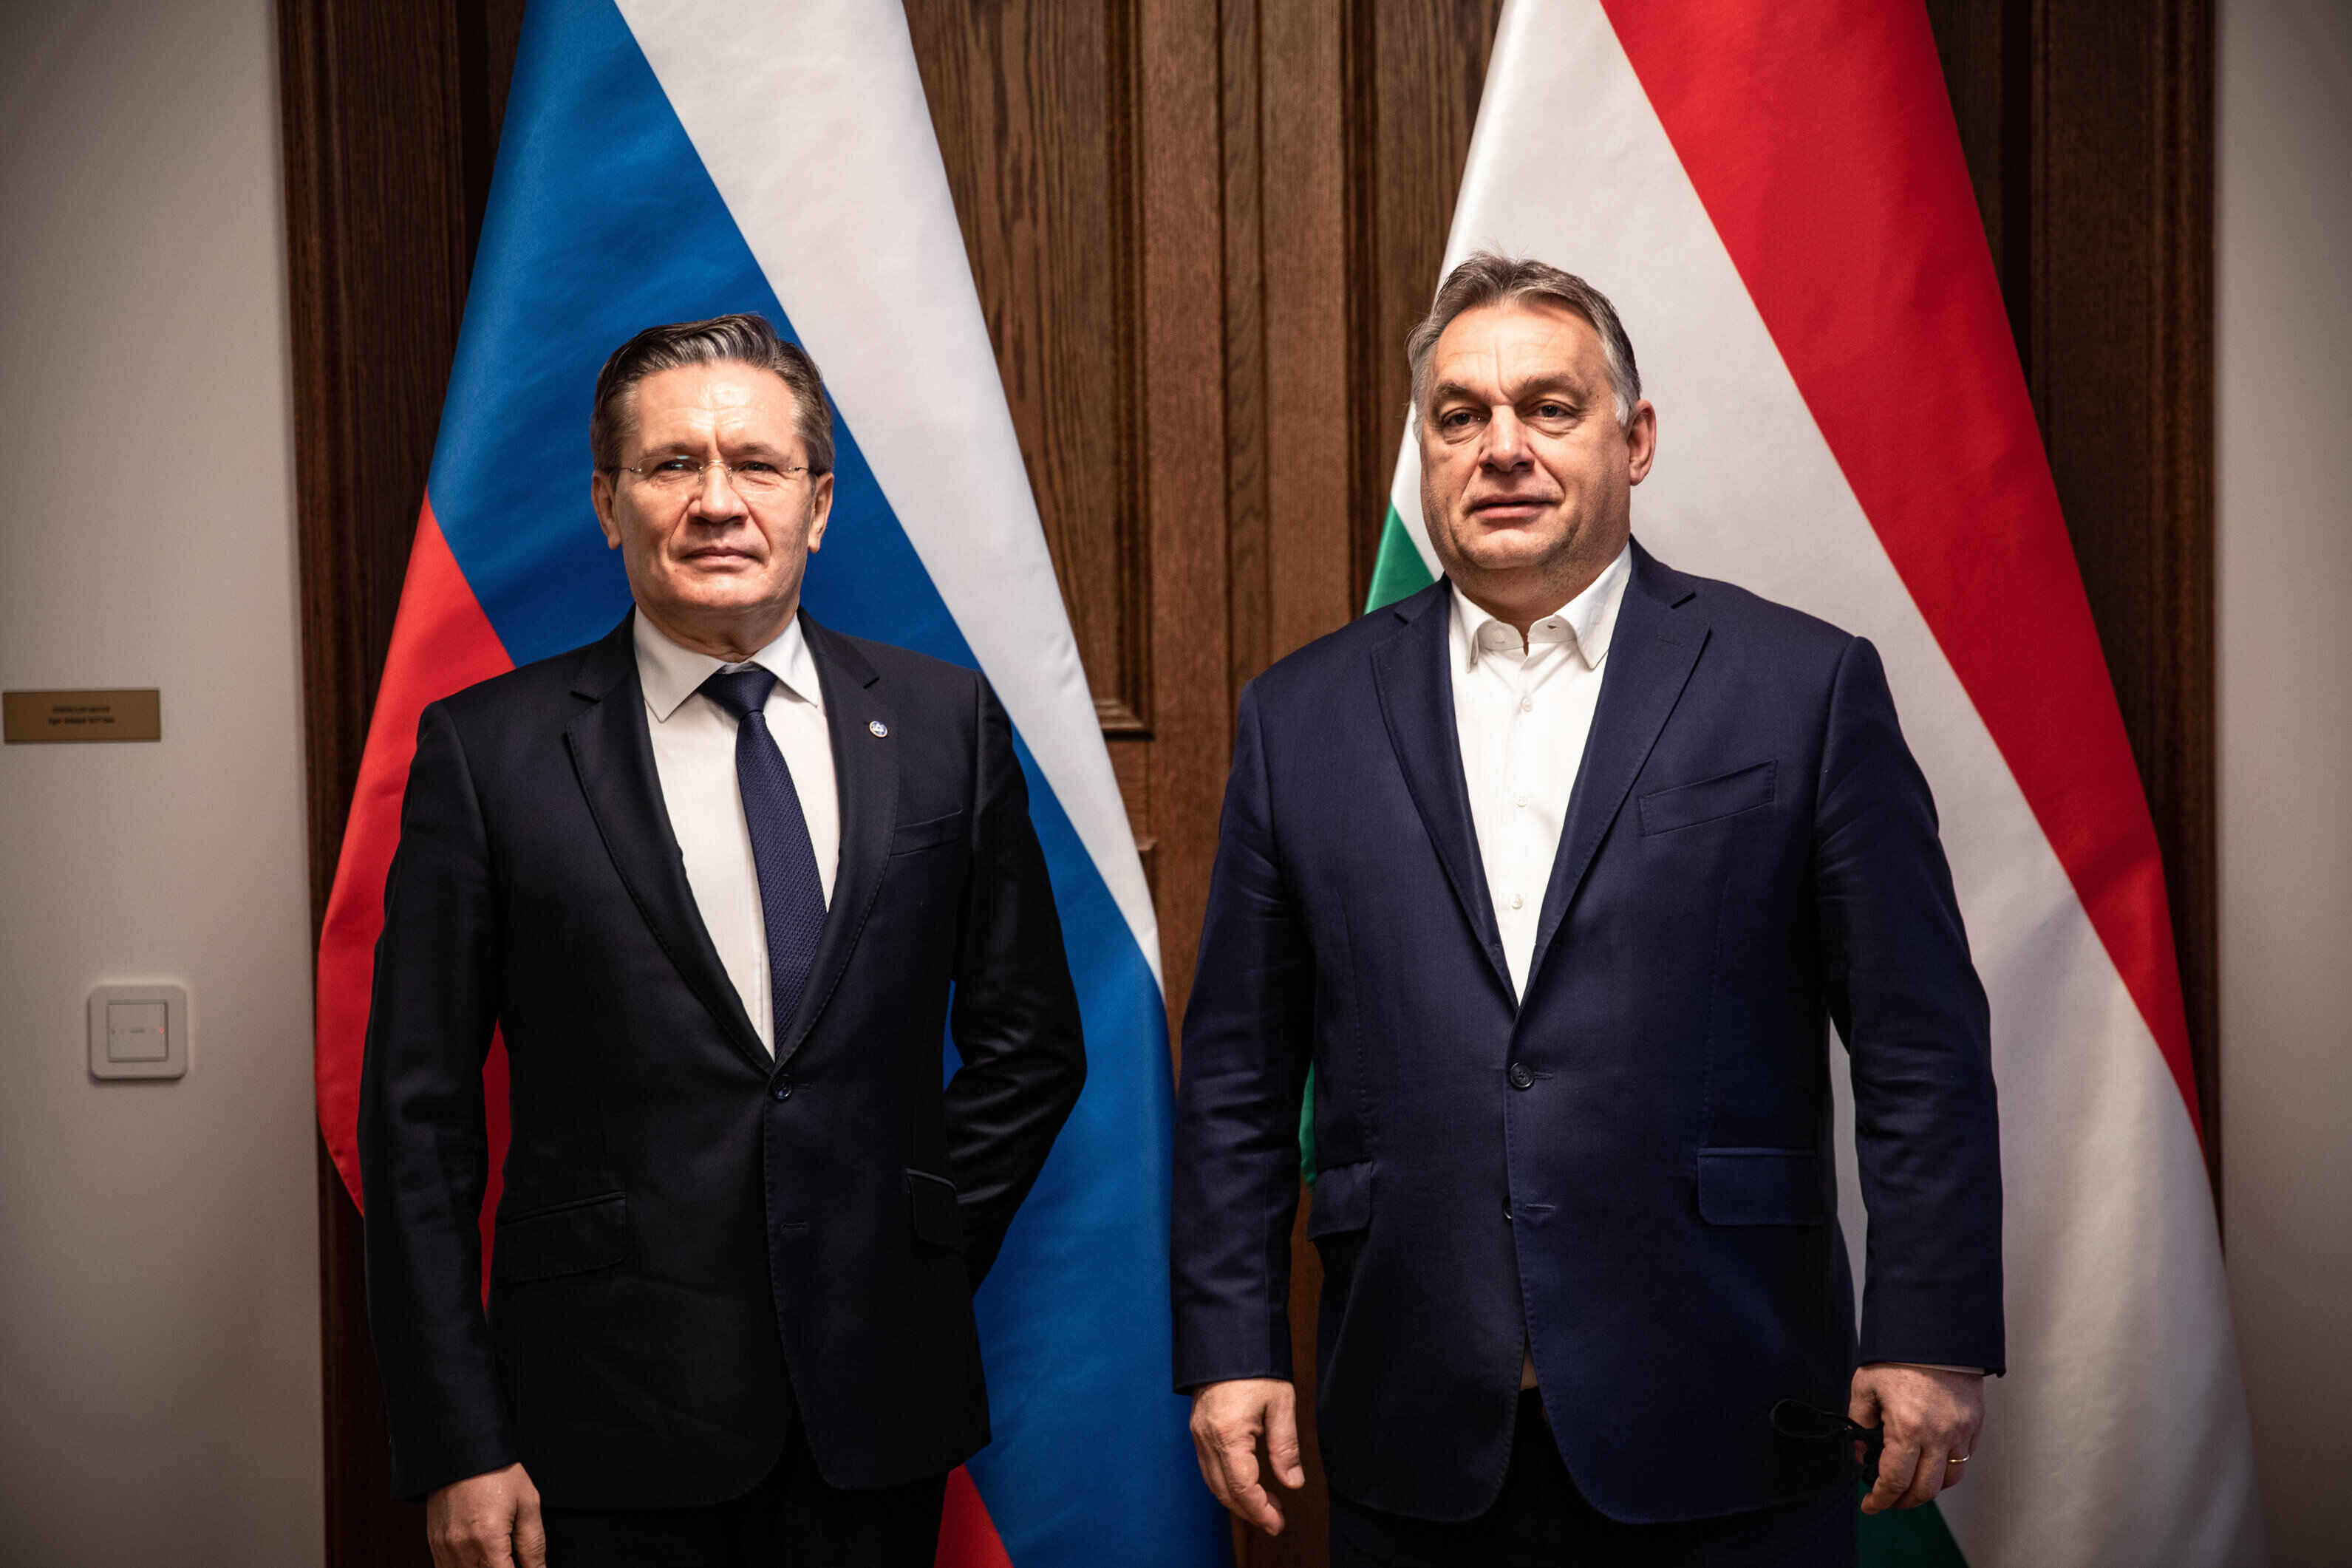 Orbán mit rosatom Kopf